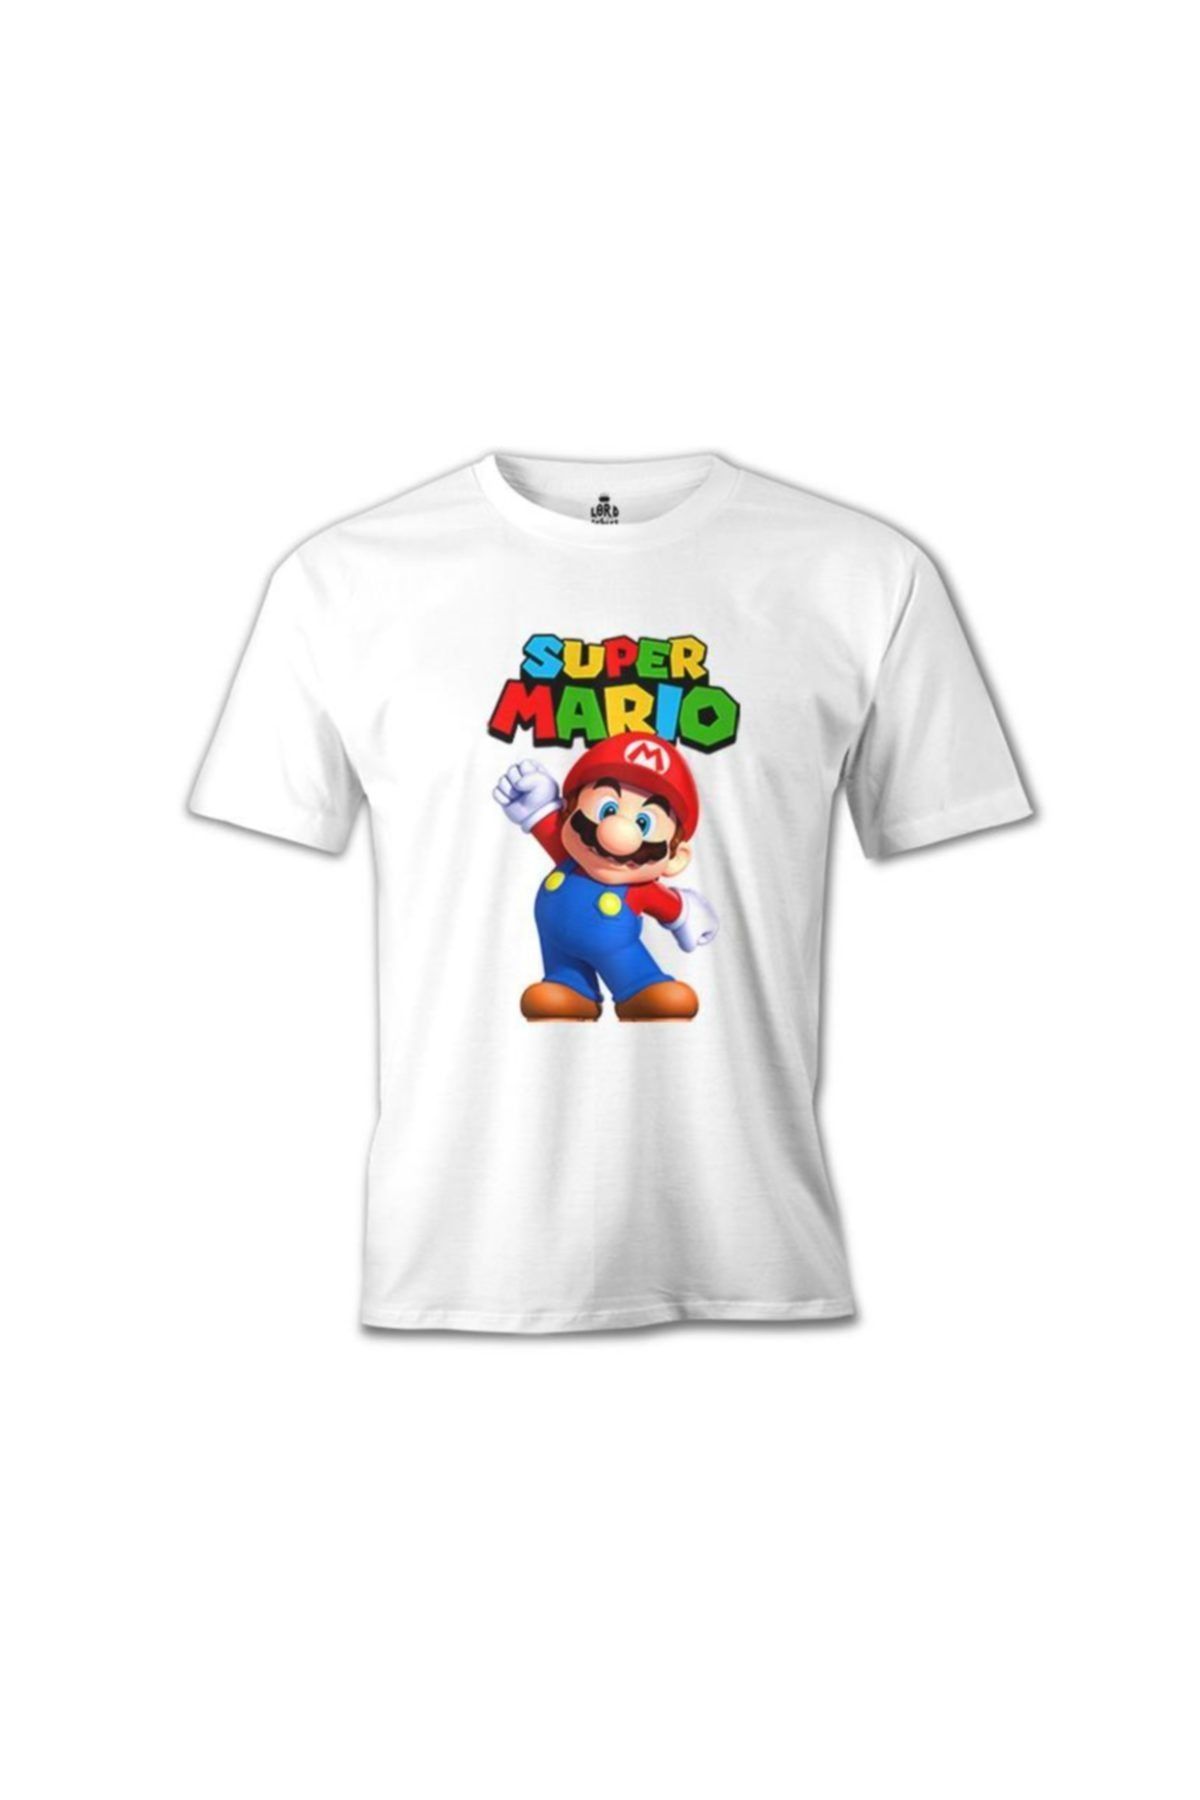 Lord T-Shirt Super Mario - Win Win Beyaz Erkek Tshirt